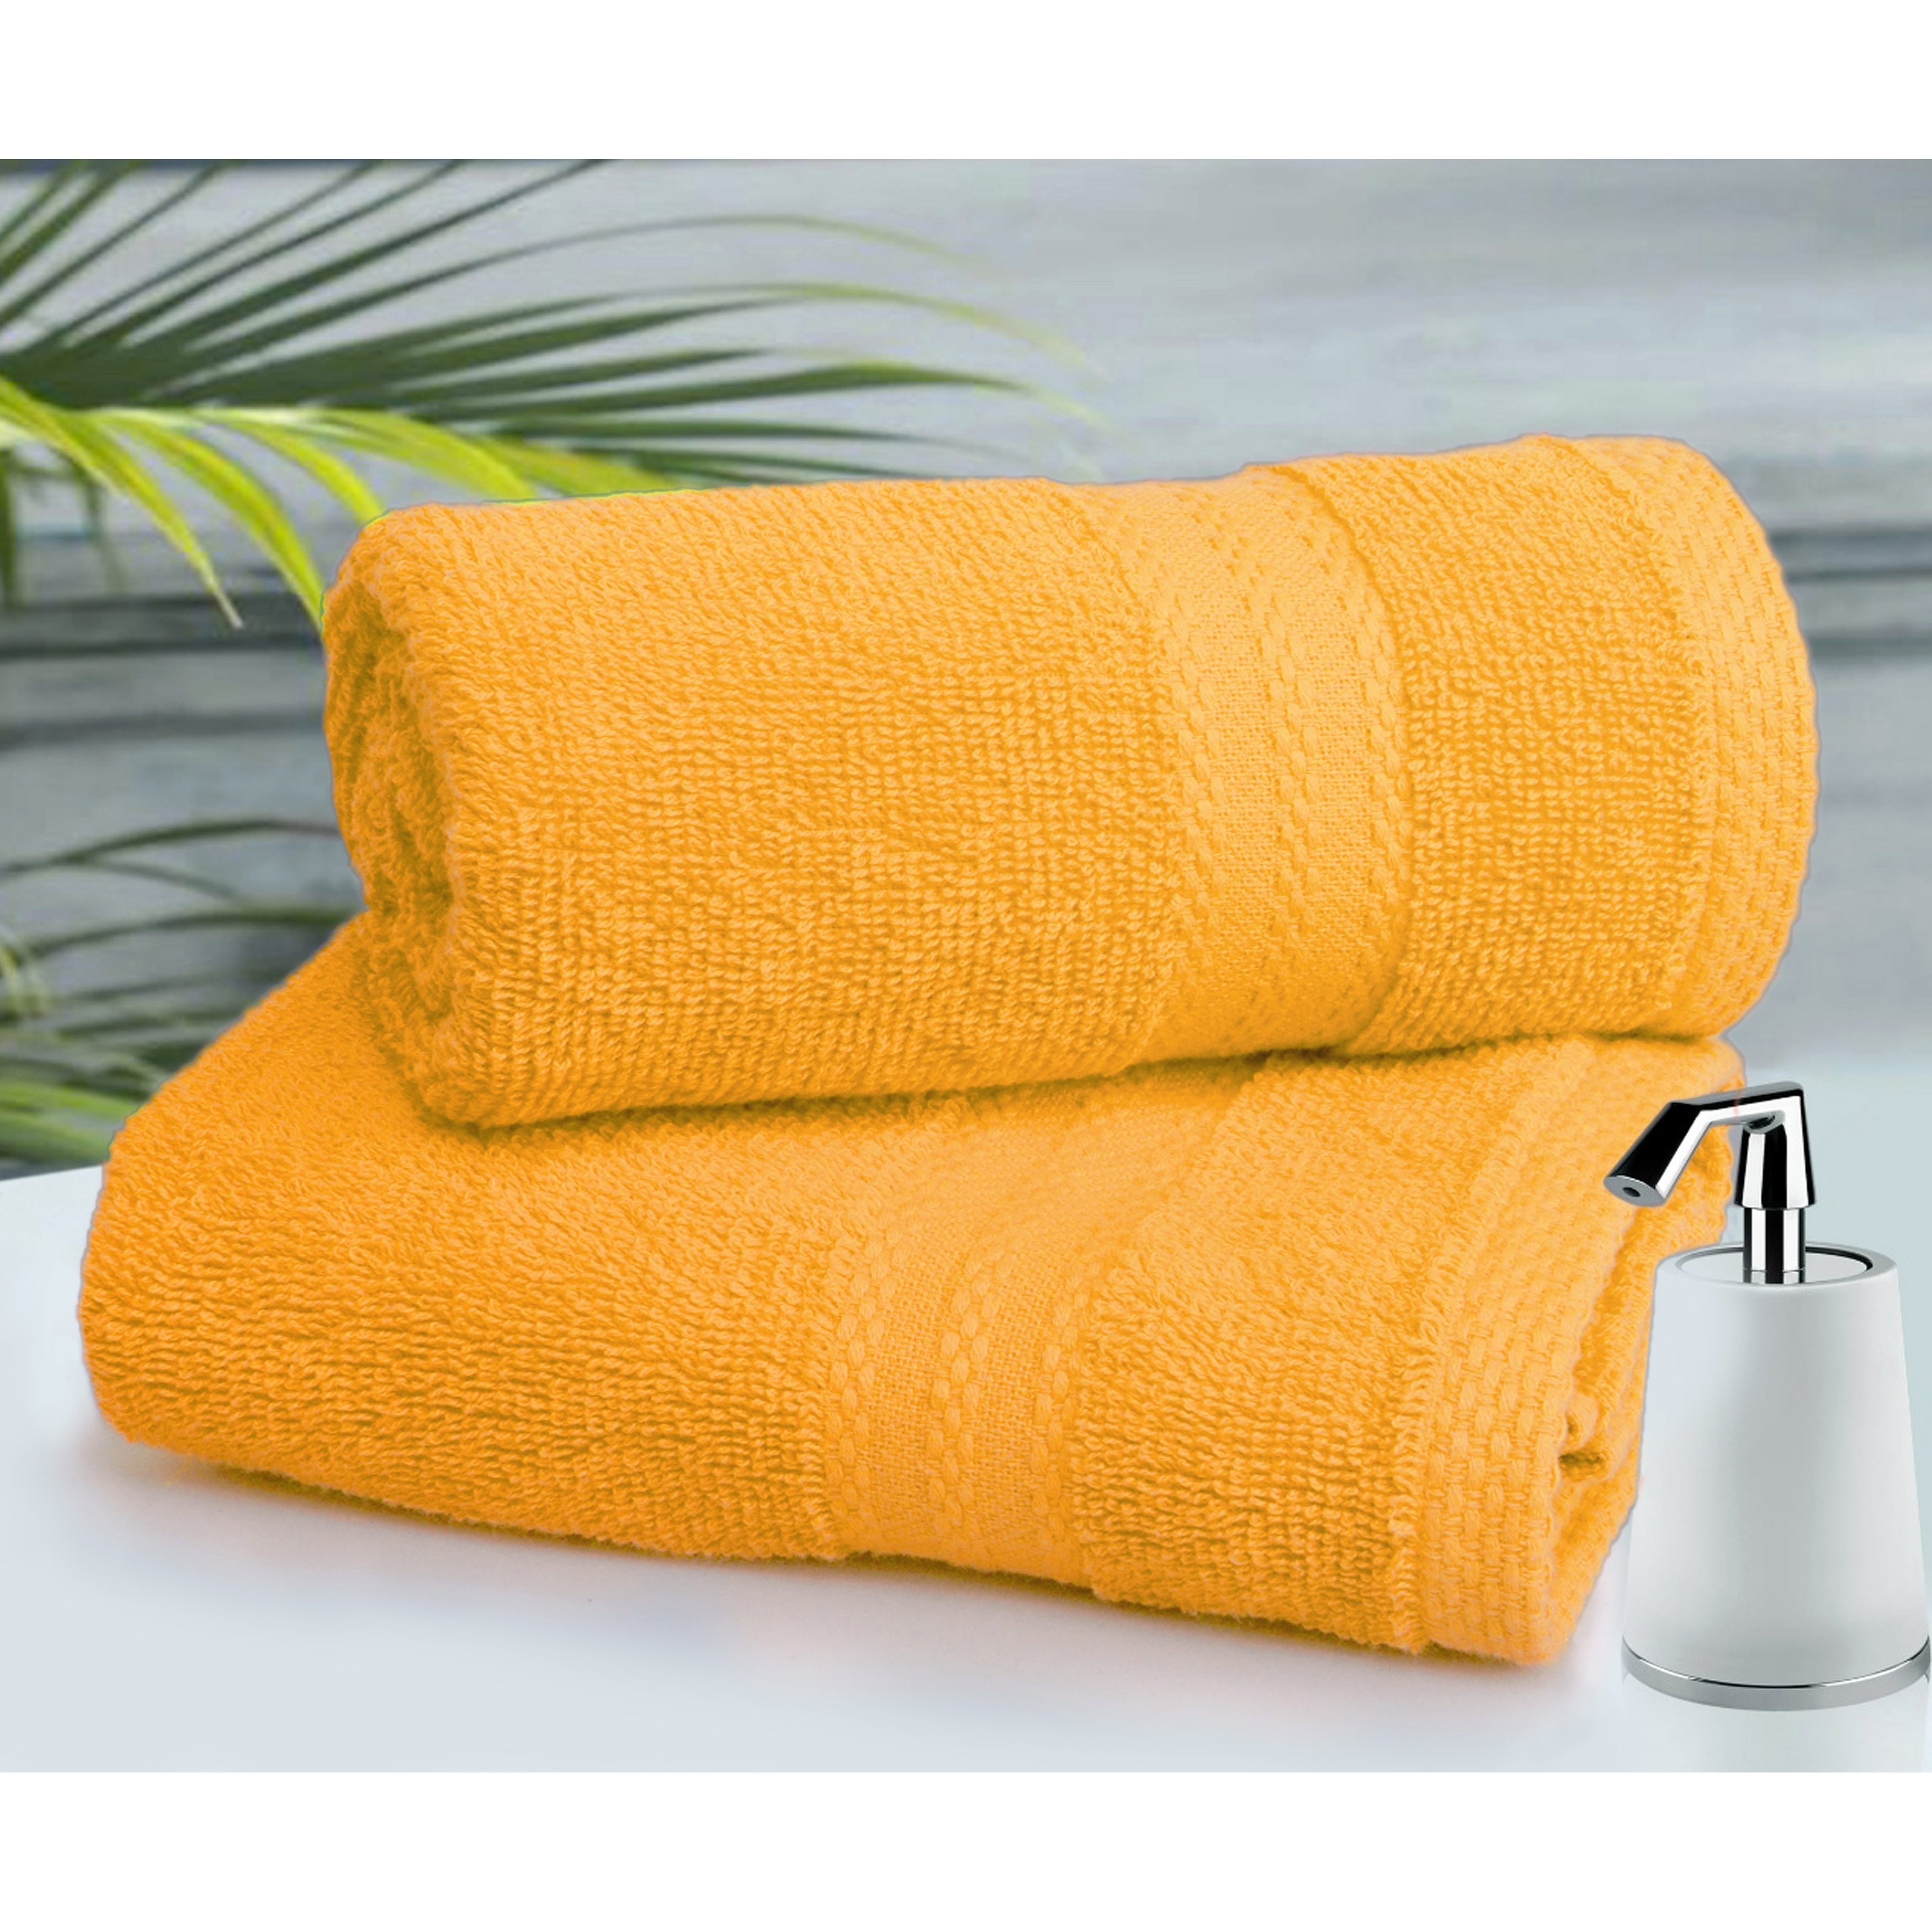 10pcs Pure Cotton Super Absorbent Large Towel Bath Towel 70*140cm Thick  Soft Bathroom Towels Comfortable Beach Towels 15 Colors - Reanga